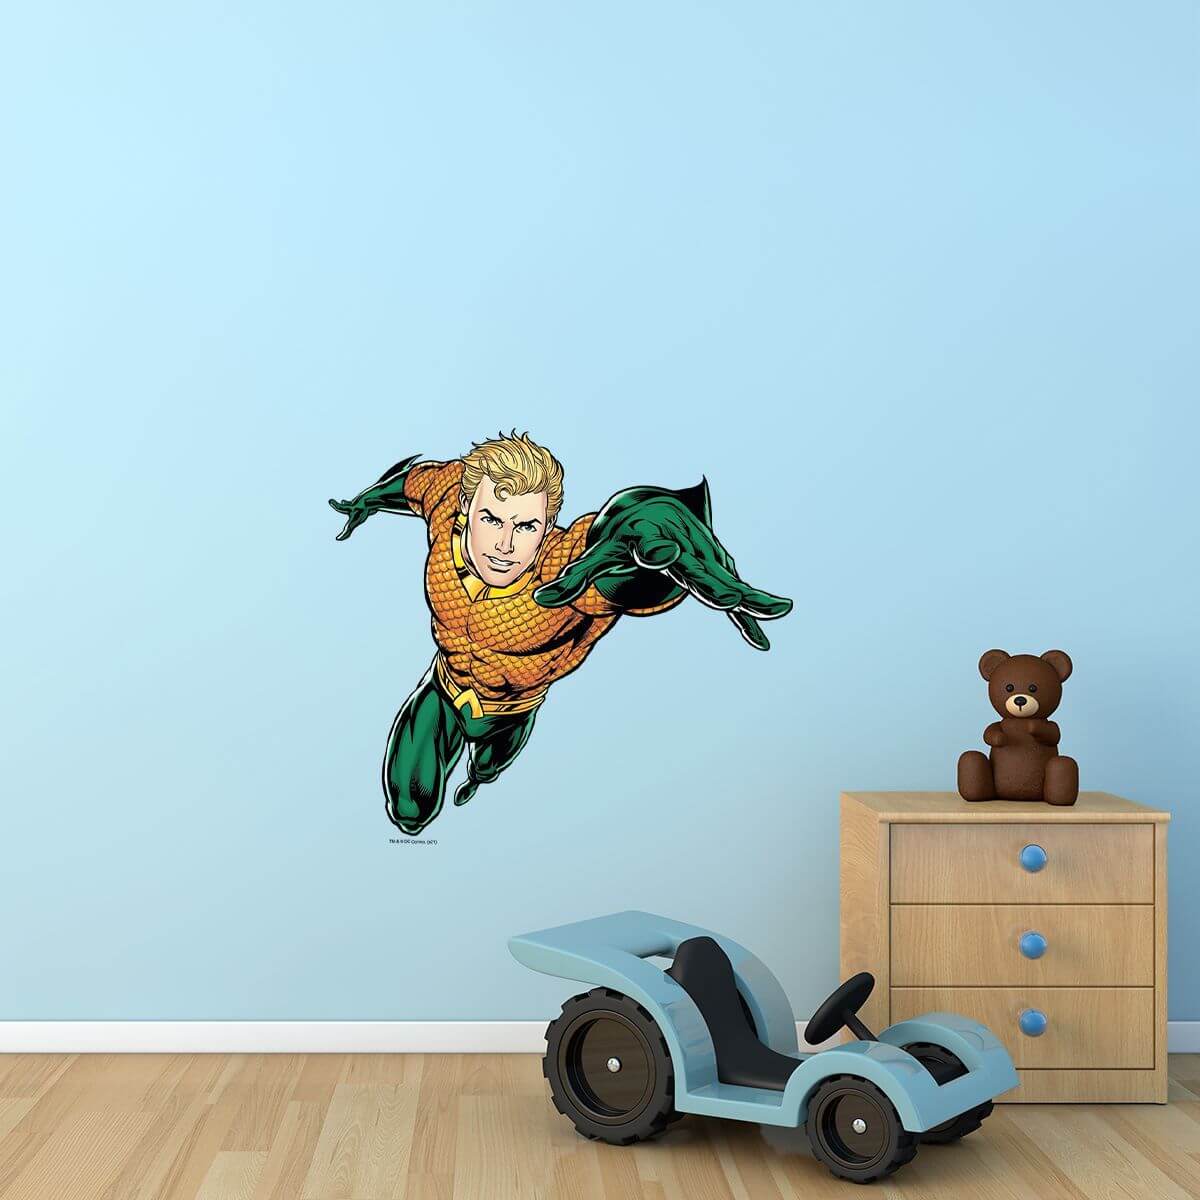 Kismet Decals Aquaman King of Seas Licensed Wall Sticker - Easy DIY Justice League Home & Room Decor Wall Art - Kismet Decals